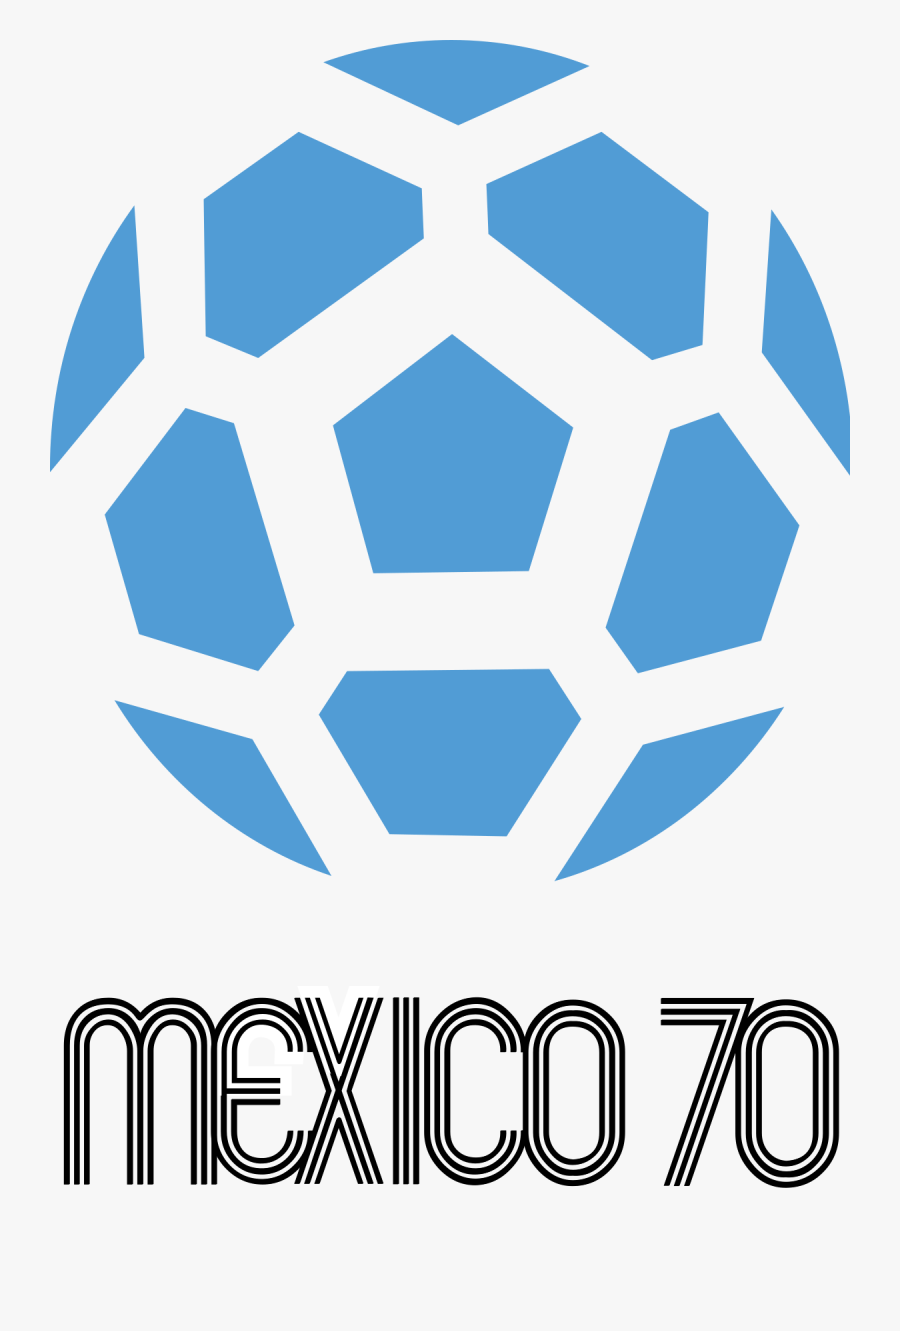 1970 Fifa World Cup Logo, Transparent Clipart